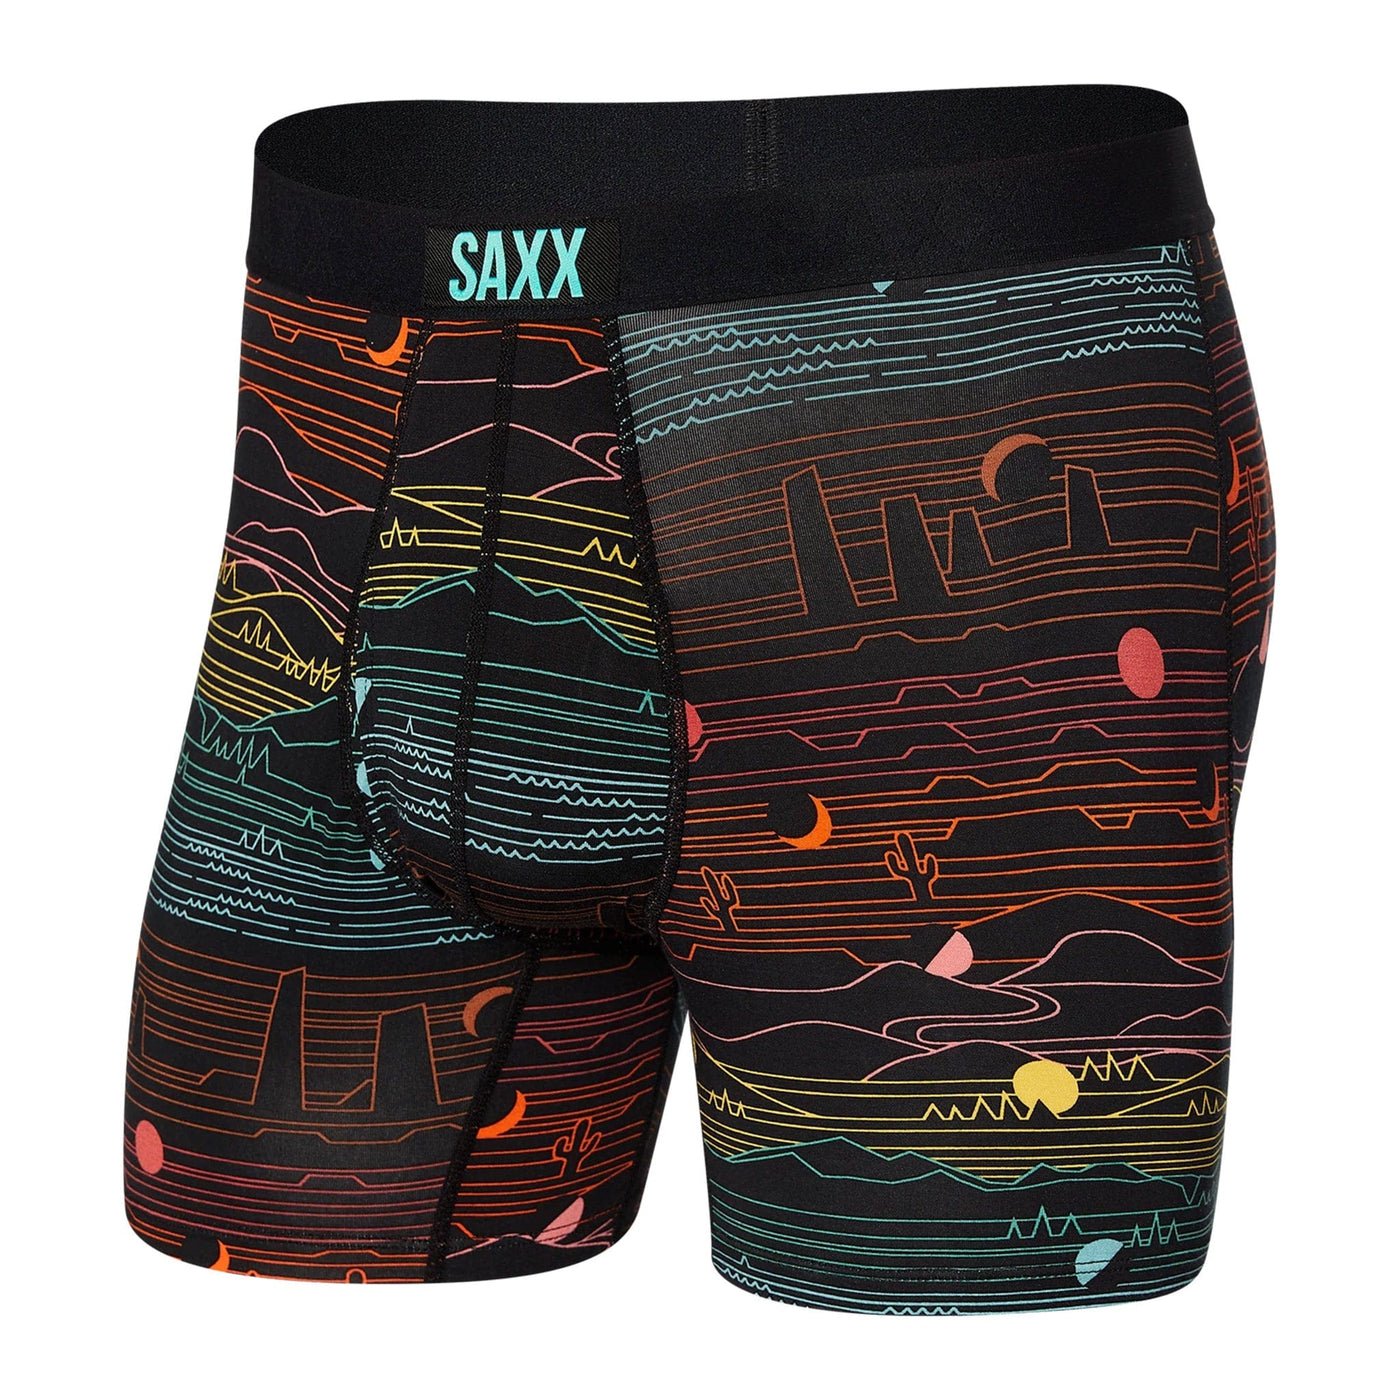 Saxx Ultra Boxers - Equinox